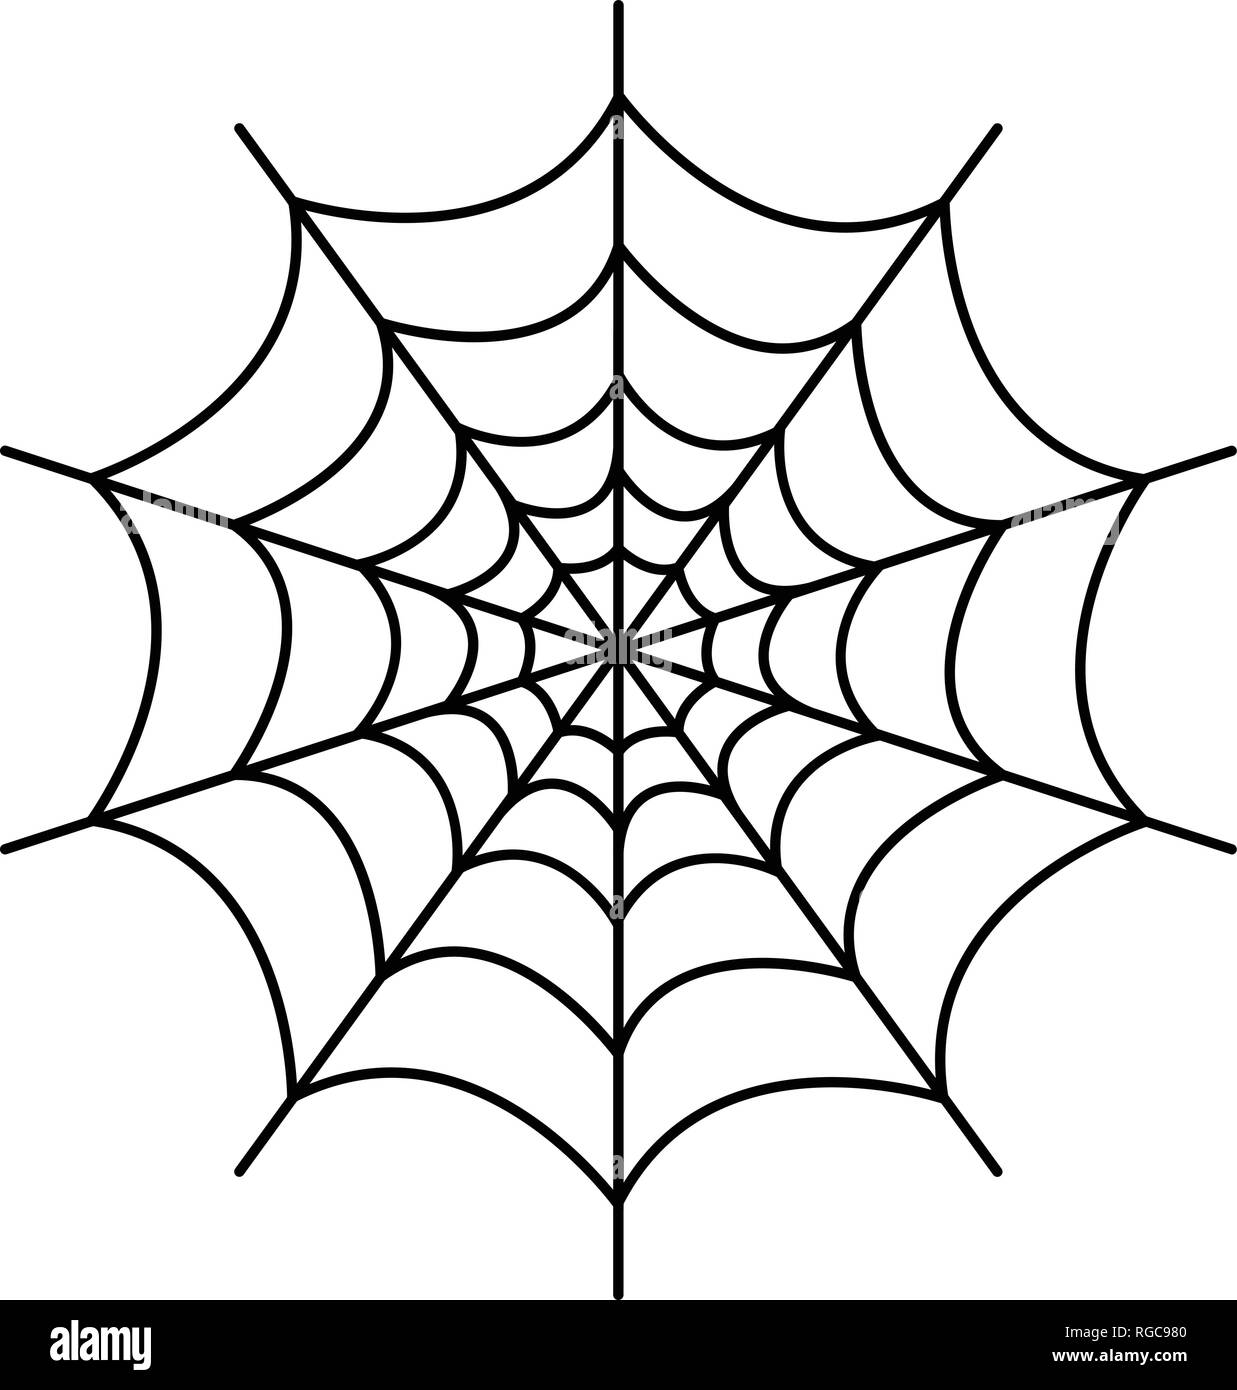 https://c8.alamy.com/comp/RGC980/symmetrical-spider-web-icon-outline-style-RGC980.jpg